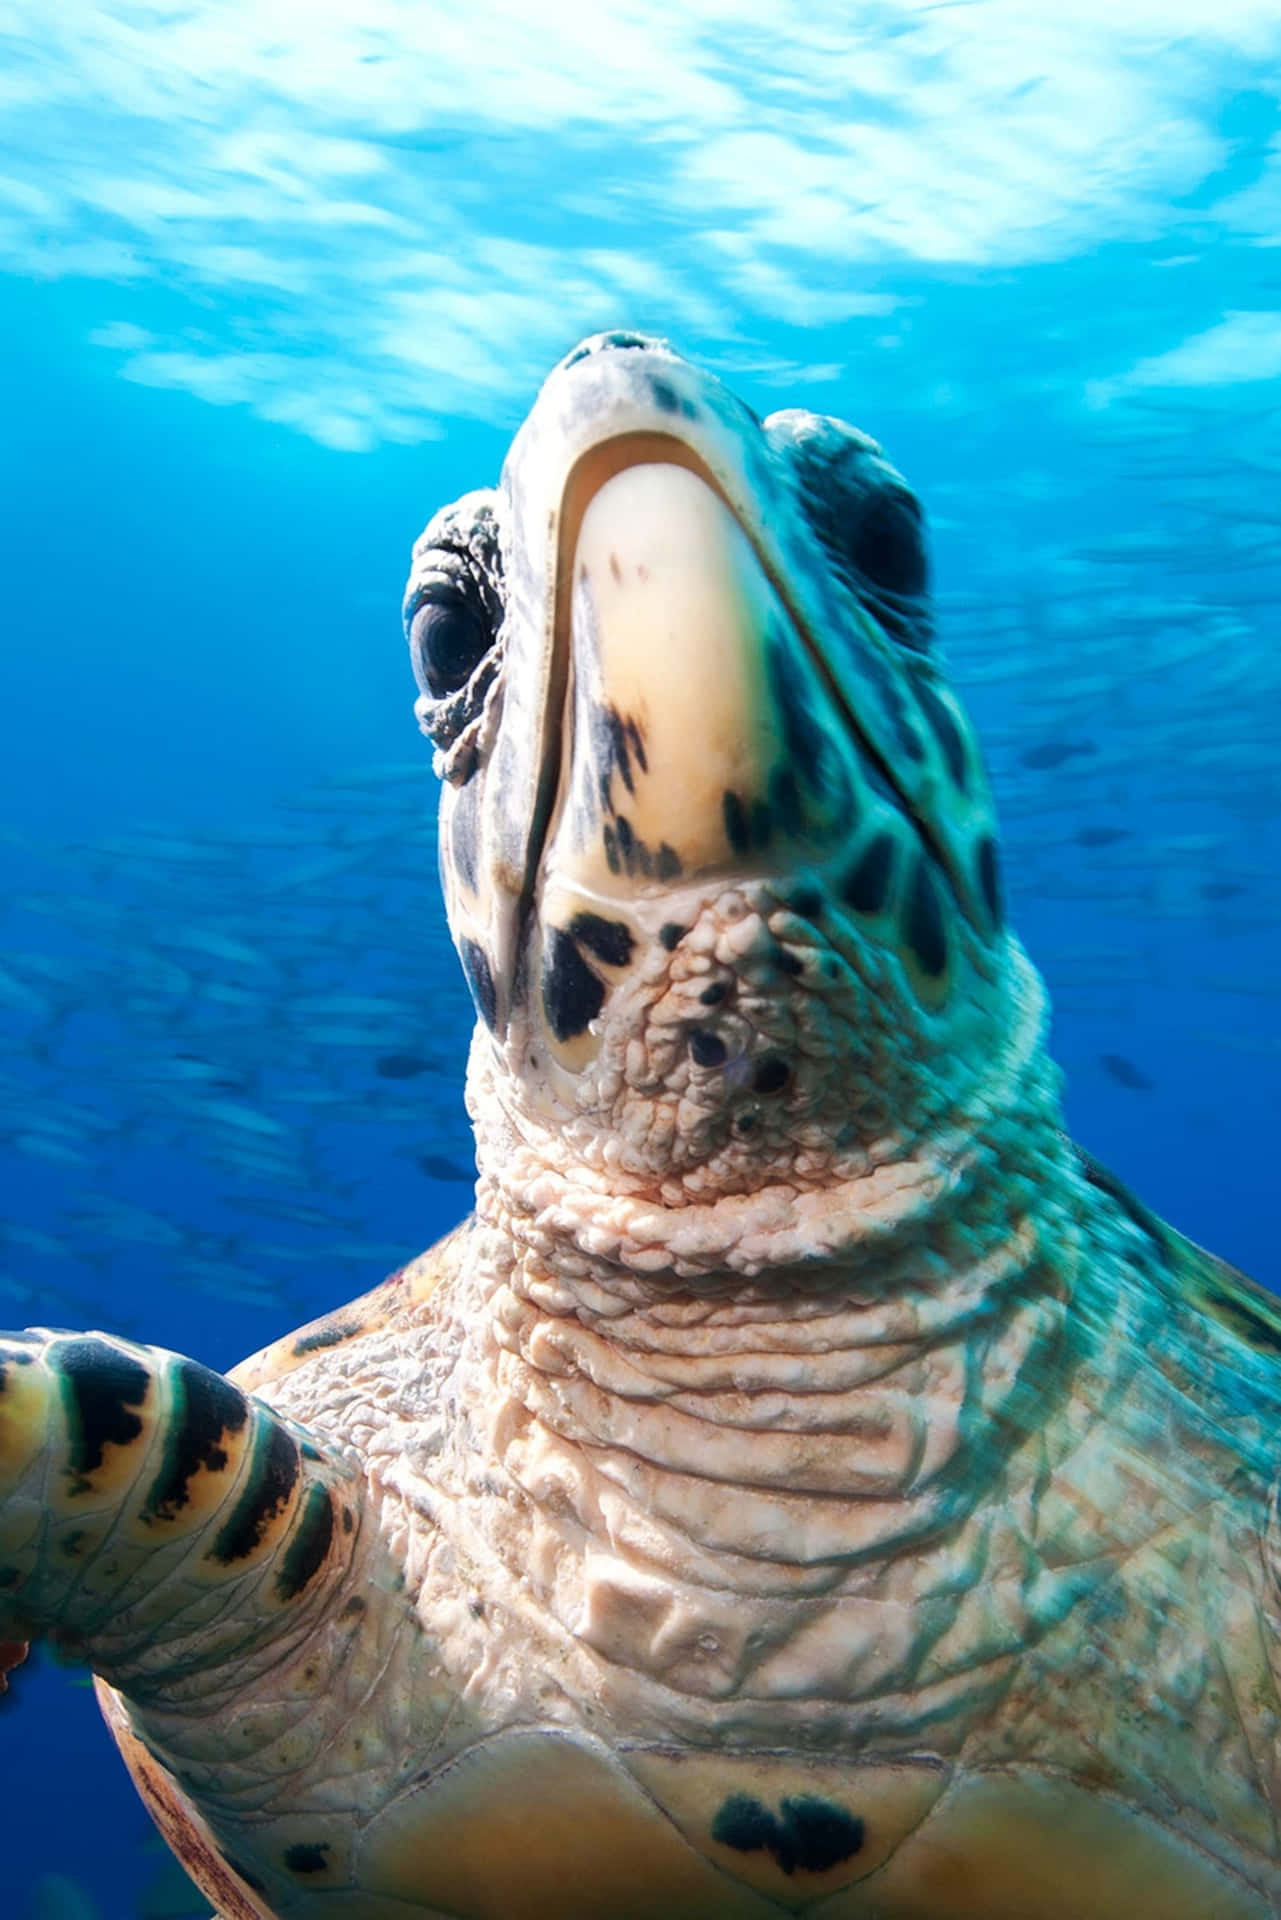 Caption: Majestic Sea Turtle Gracefully Swimming